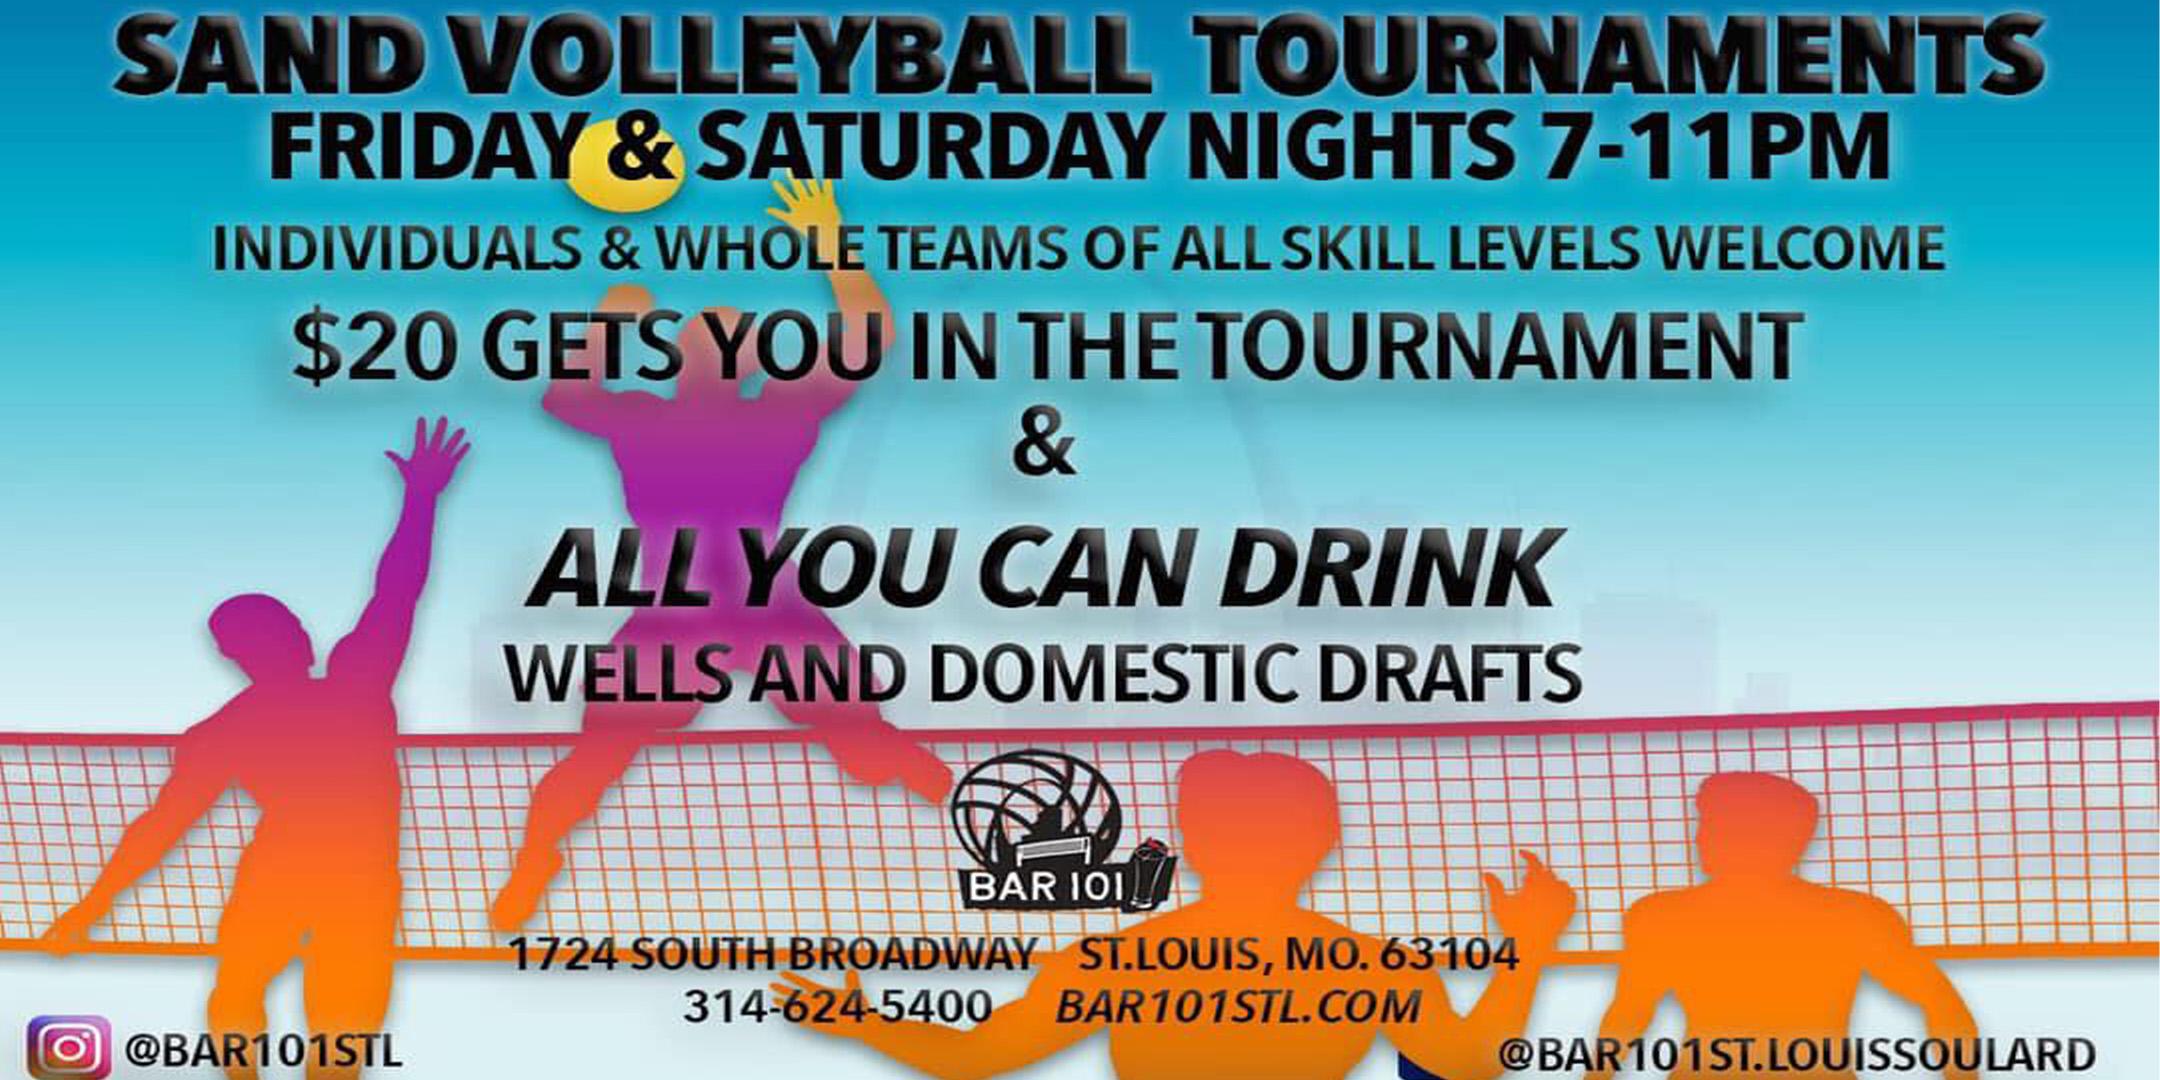 Bar 101 Weekend Sand Volleyball Tournaments